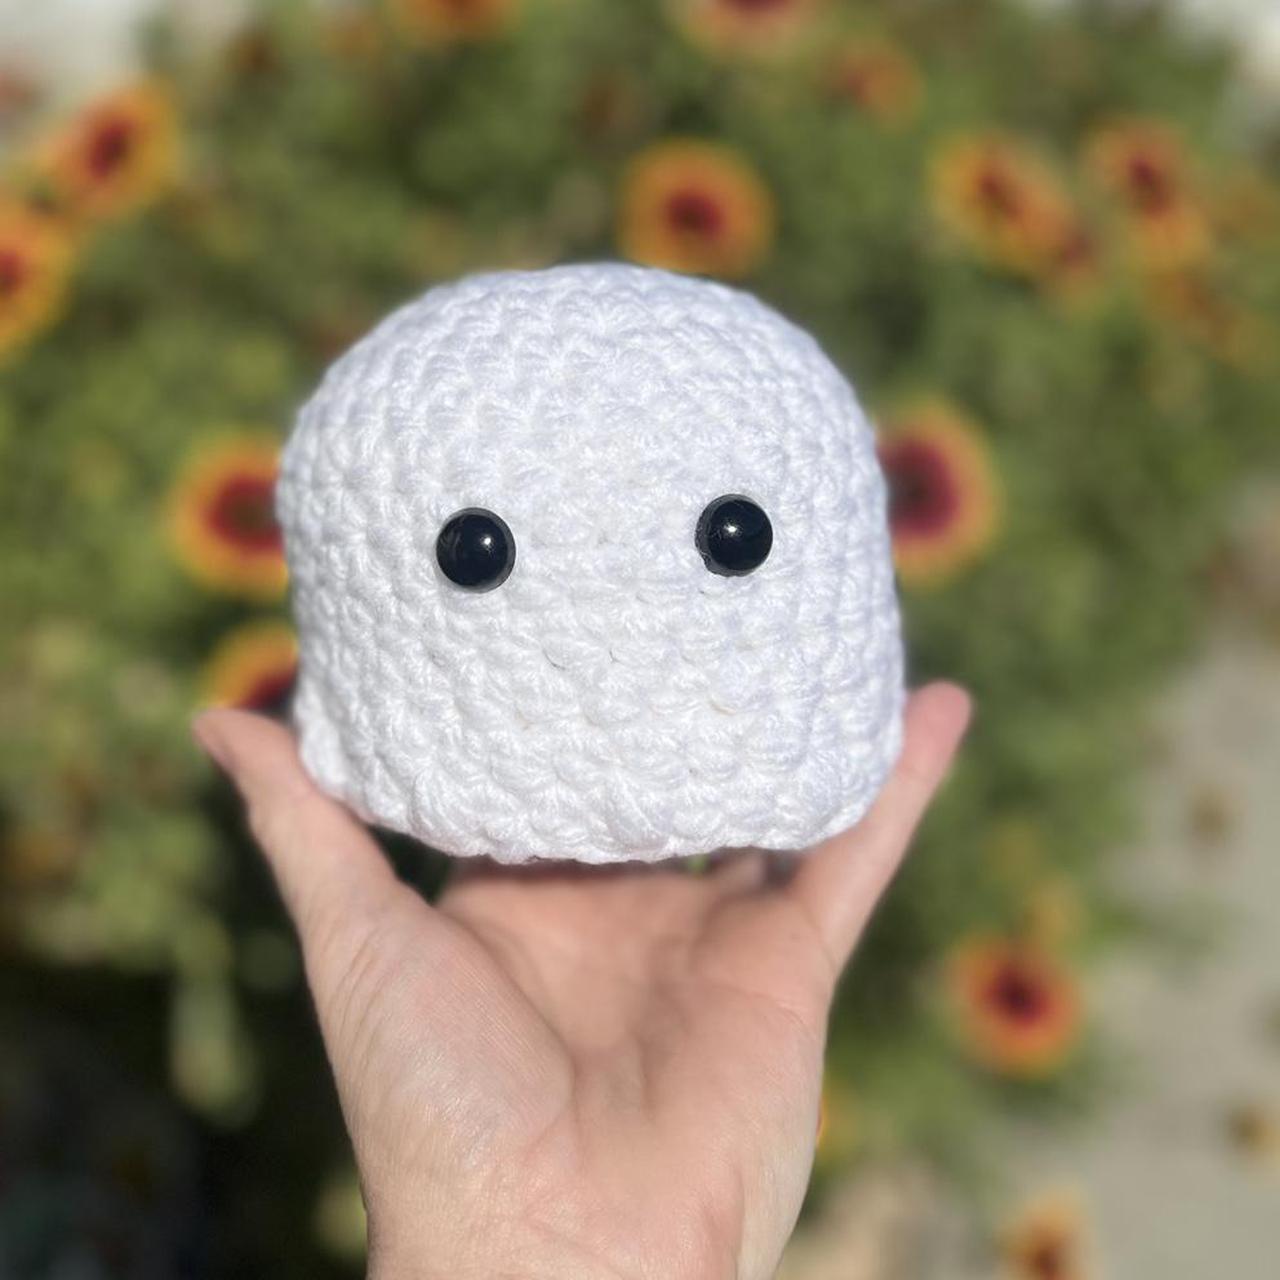 Emotional Support Crochet 